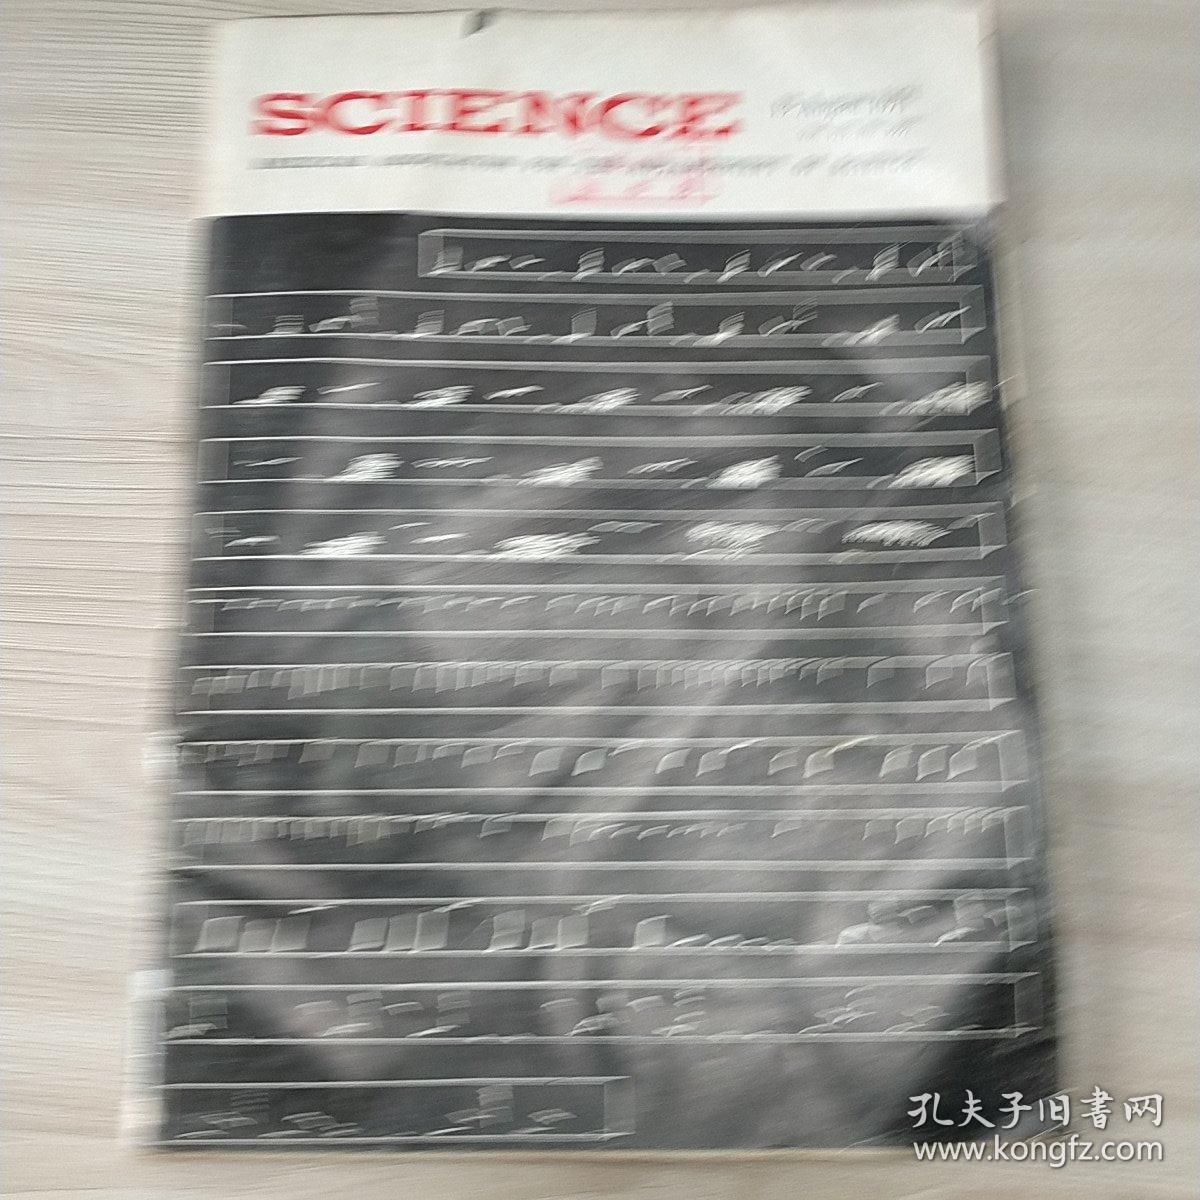 SCIENCE
13 August 1971英文原版